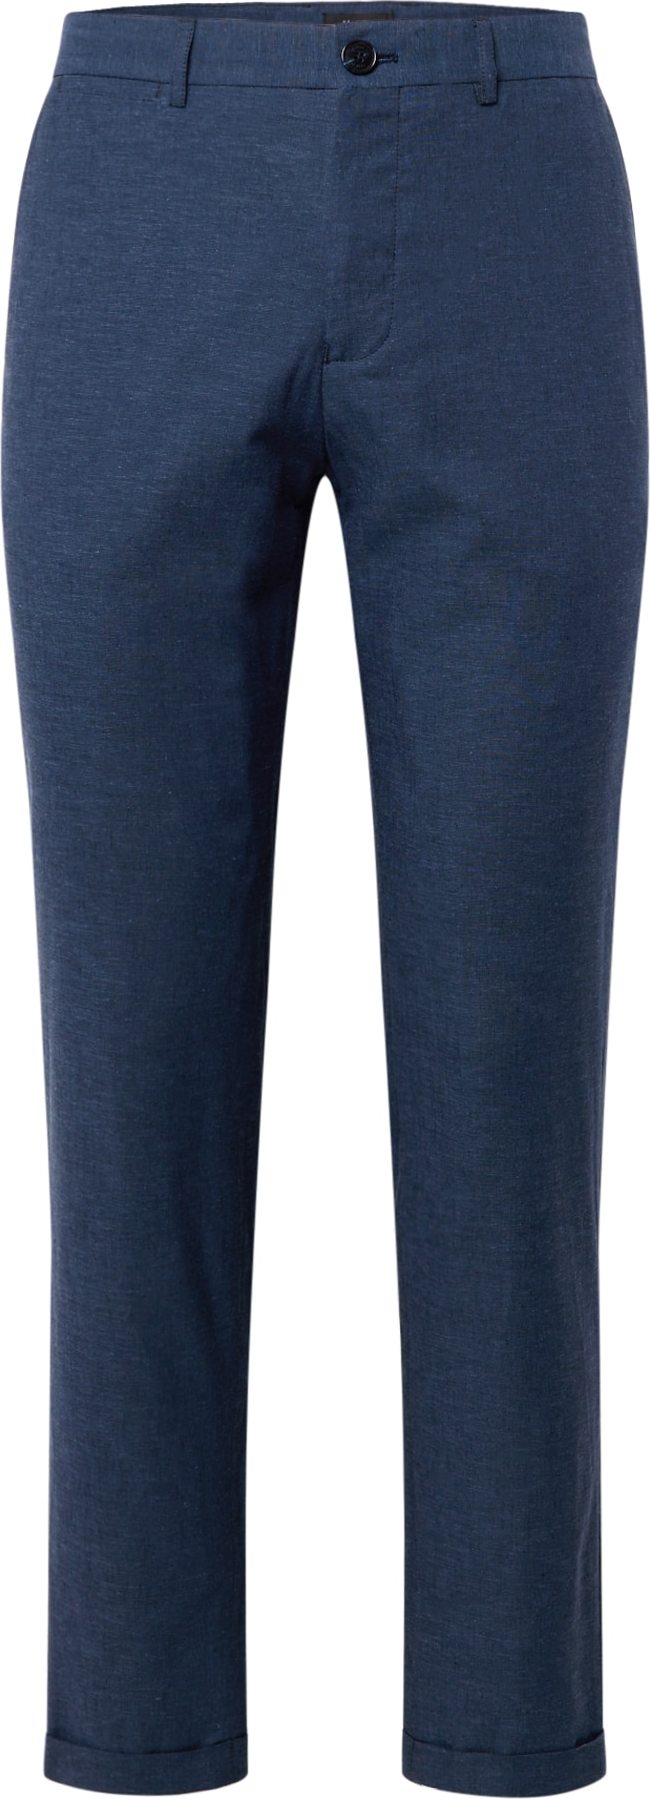 Chino kalhoty 'Liam' Matinique námořnická modř